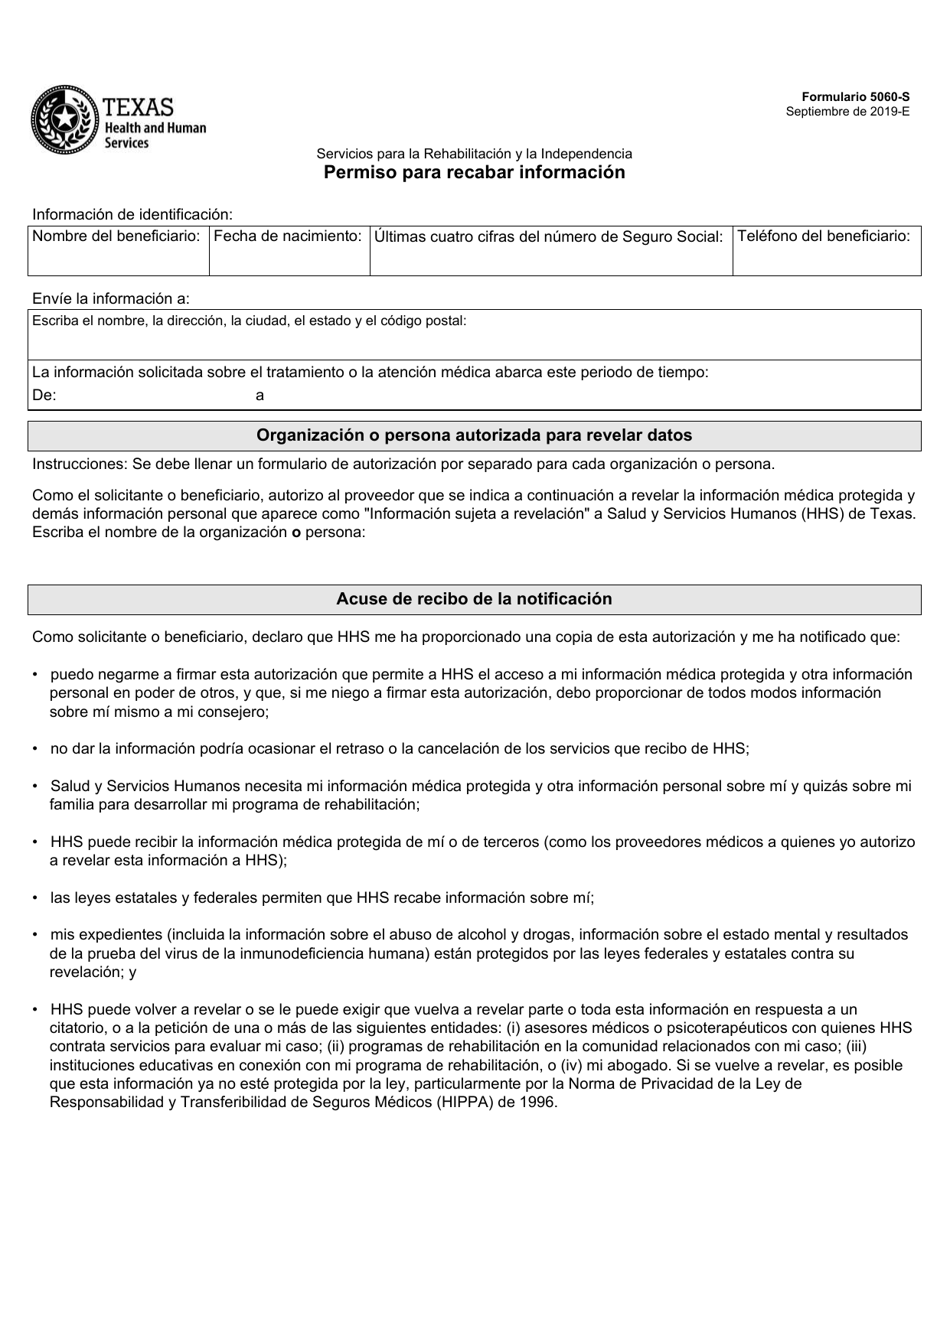 Formulario 5060-S Permiso Para Recabar Informacion - Texas (Spanish), Page 1